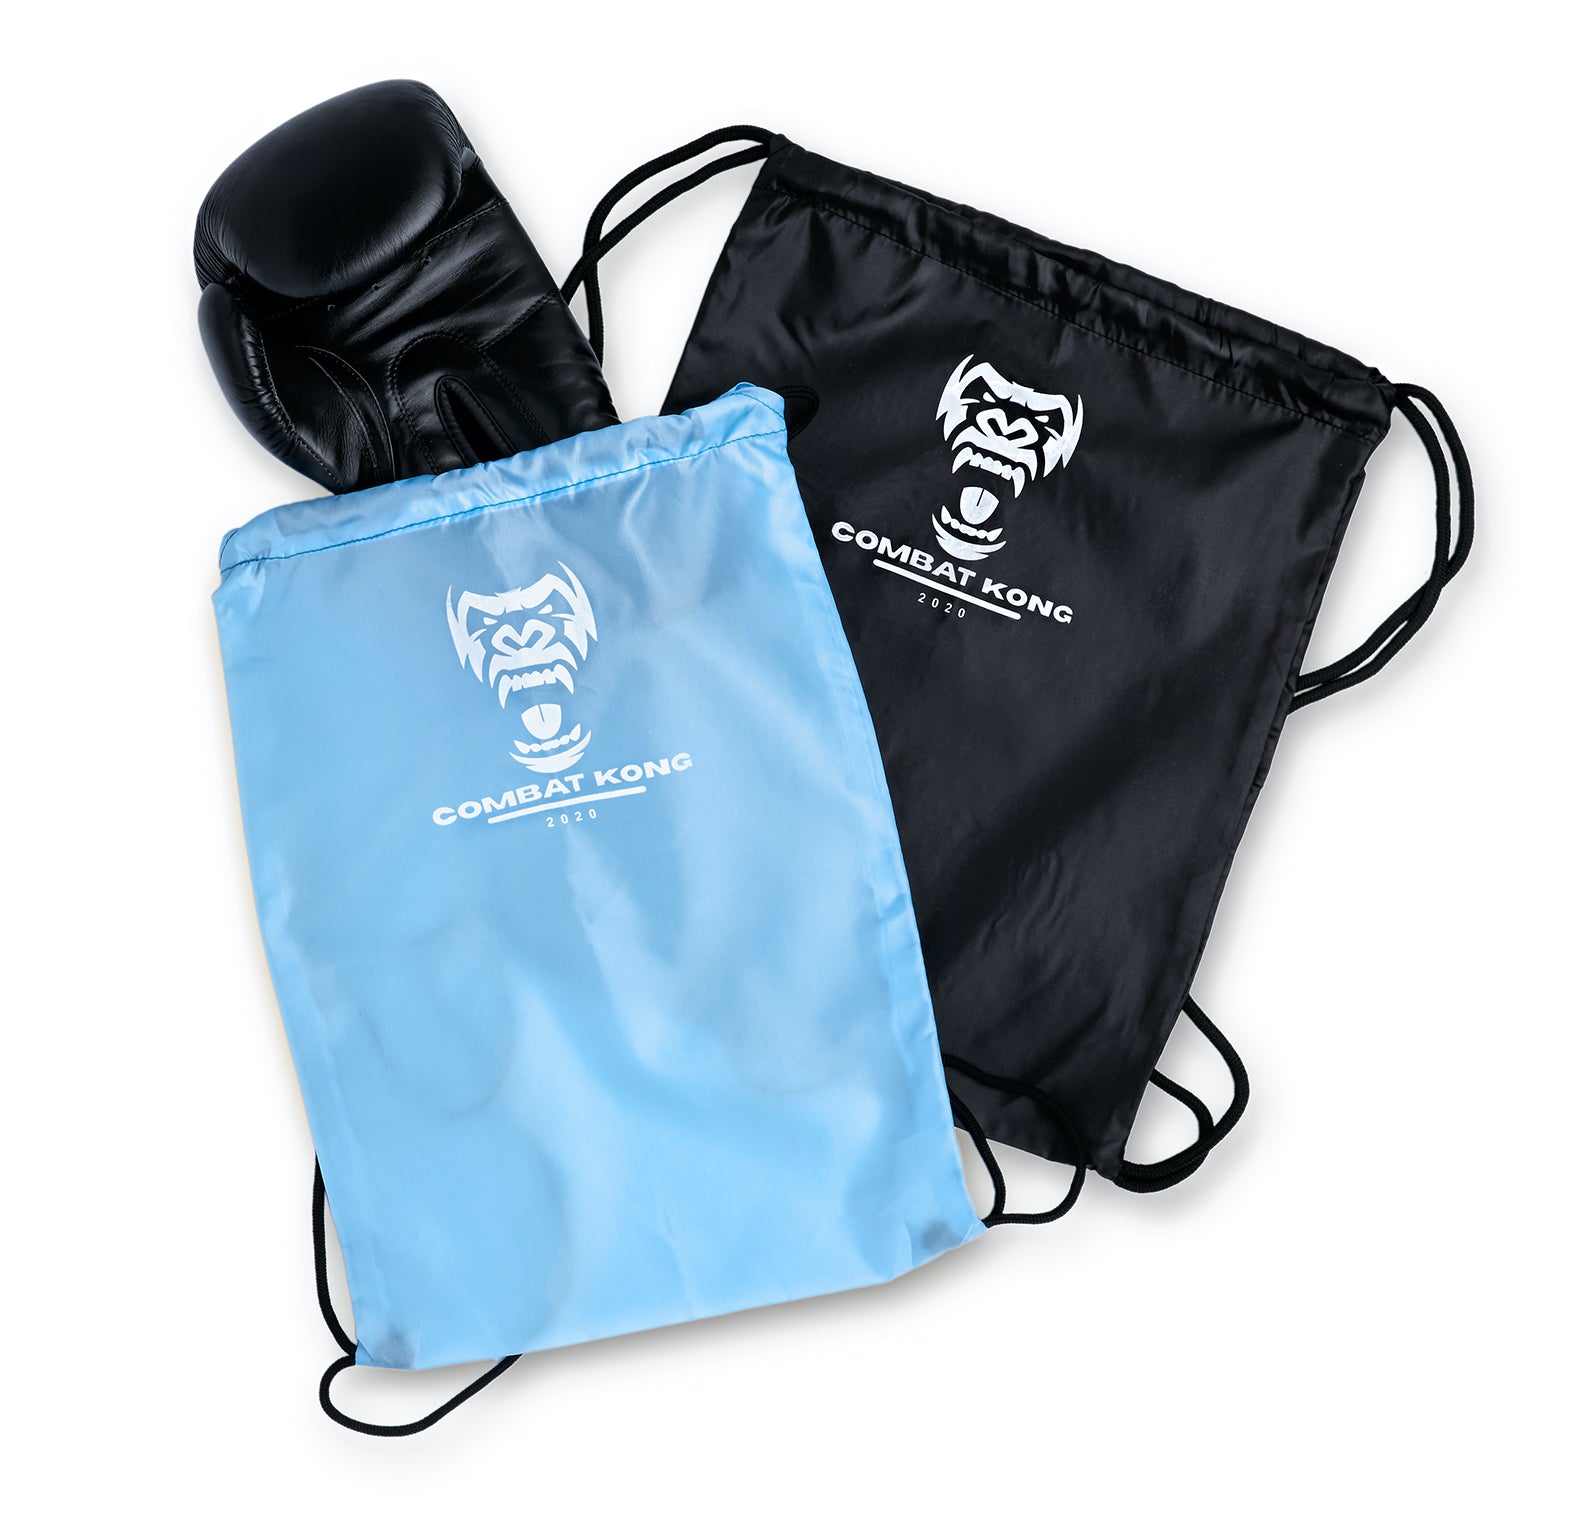 Combat Kong Gloves Smart Bag